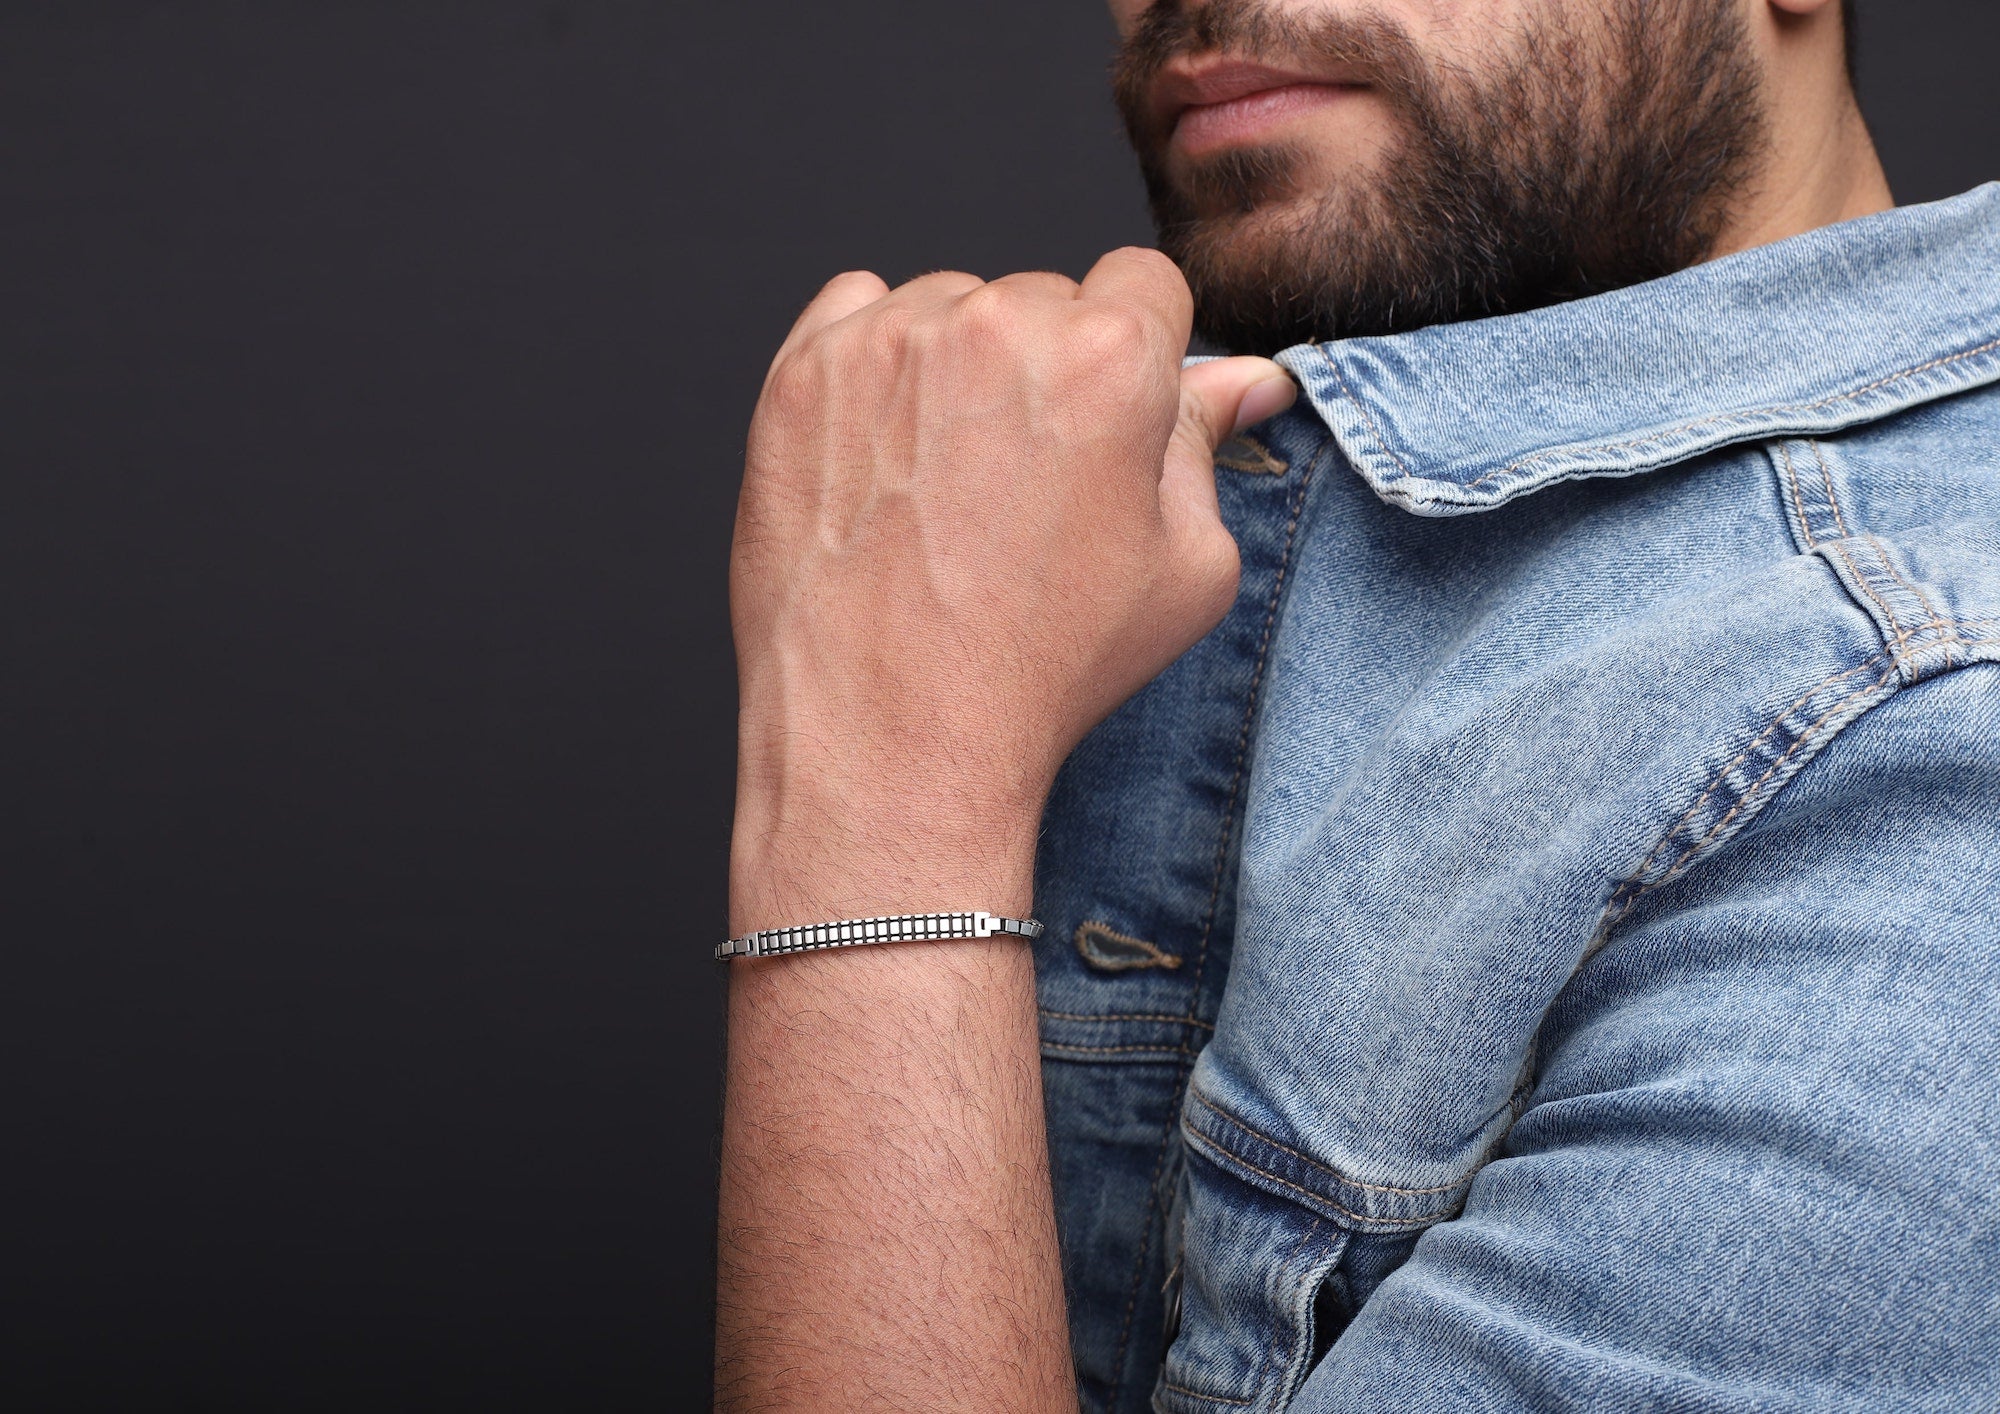 Stylish Silver Box Link Bracelet for Men - Shop Now! – ORIONZ